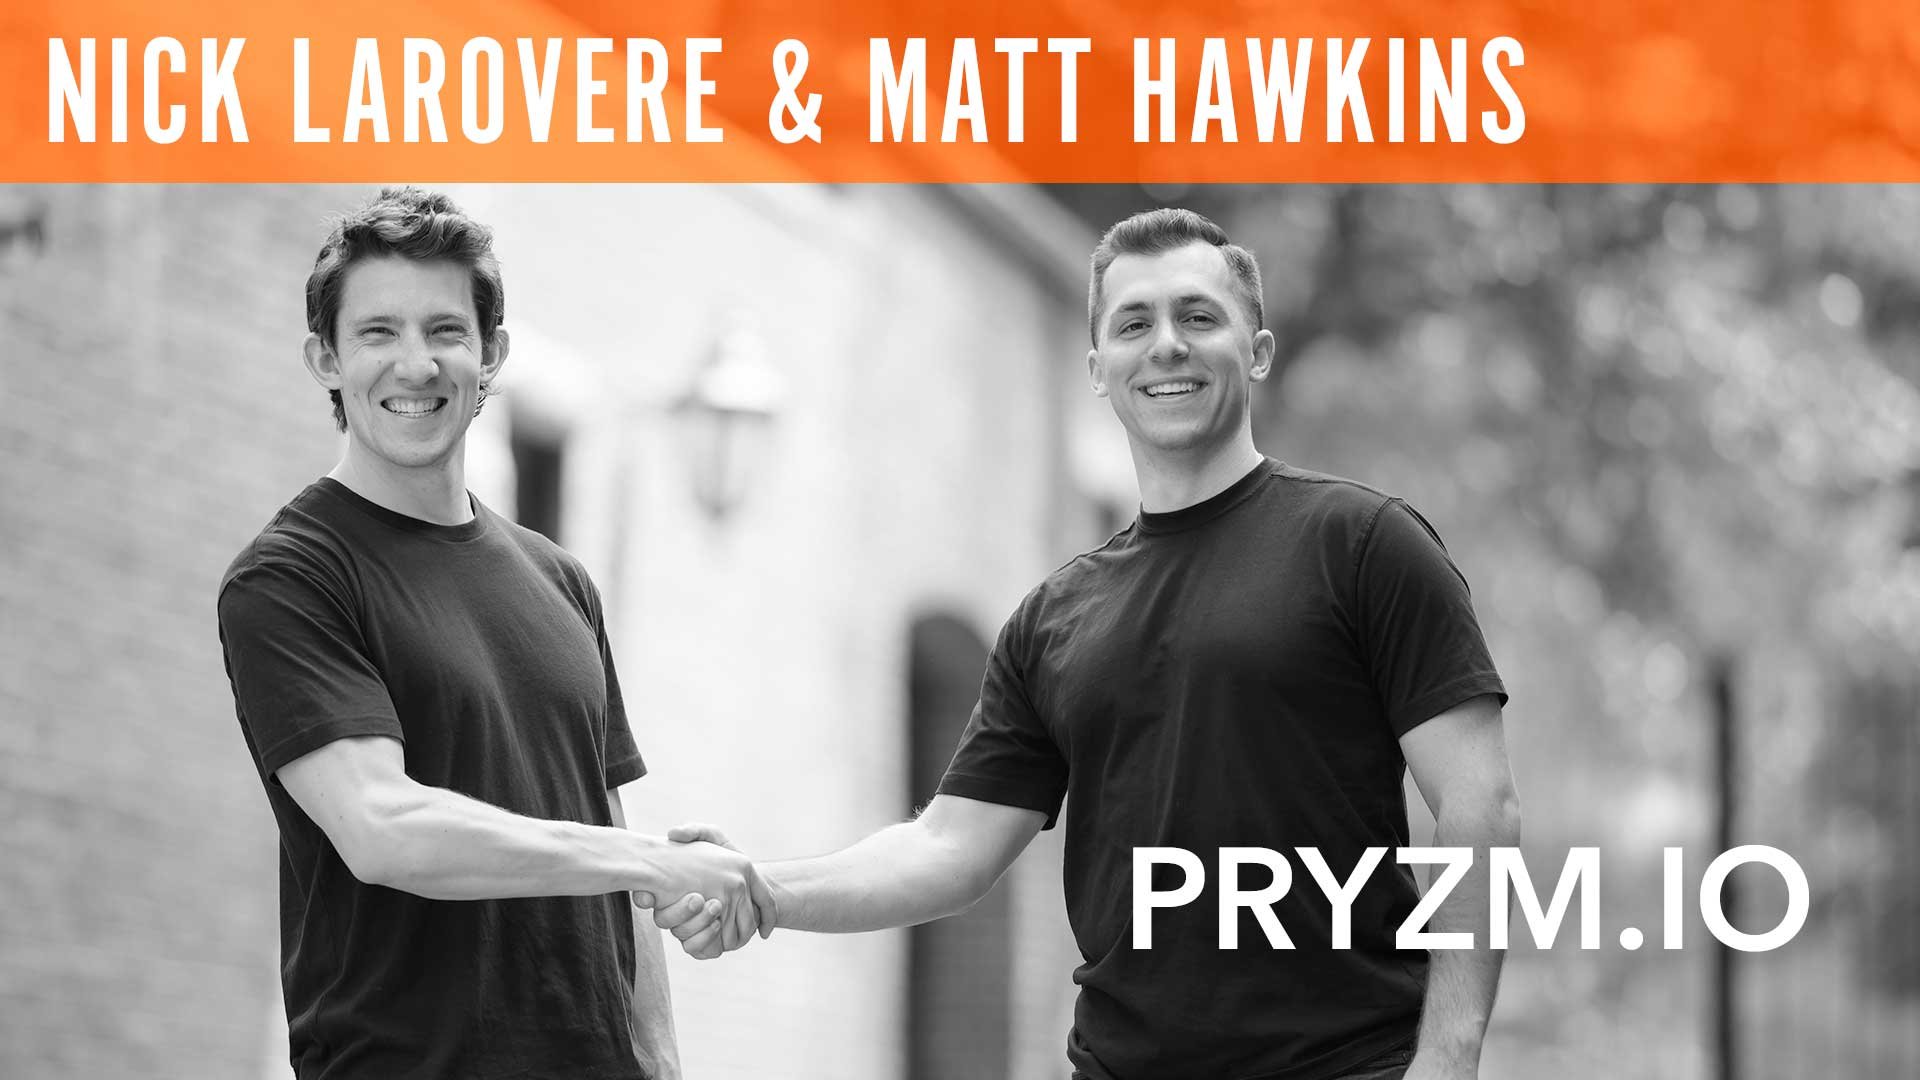 Nick LaRovere and Matt Hawkins, "Pryzm.io"